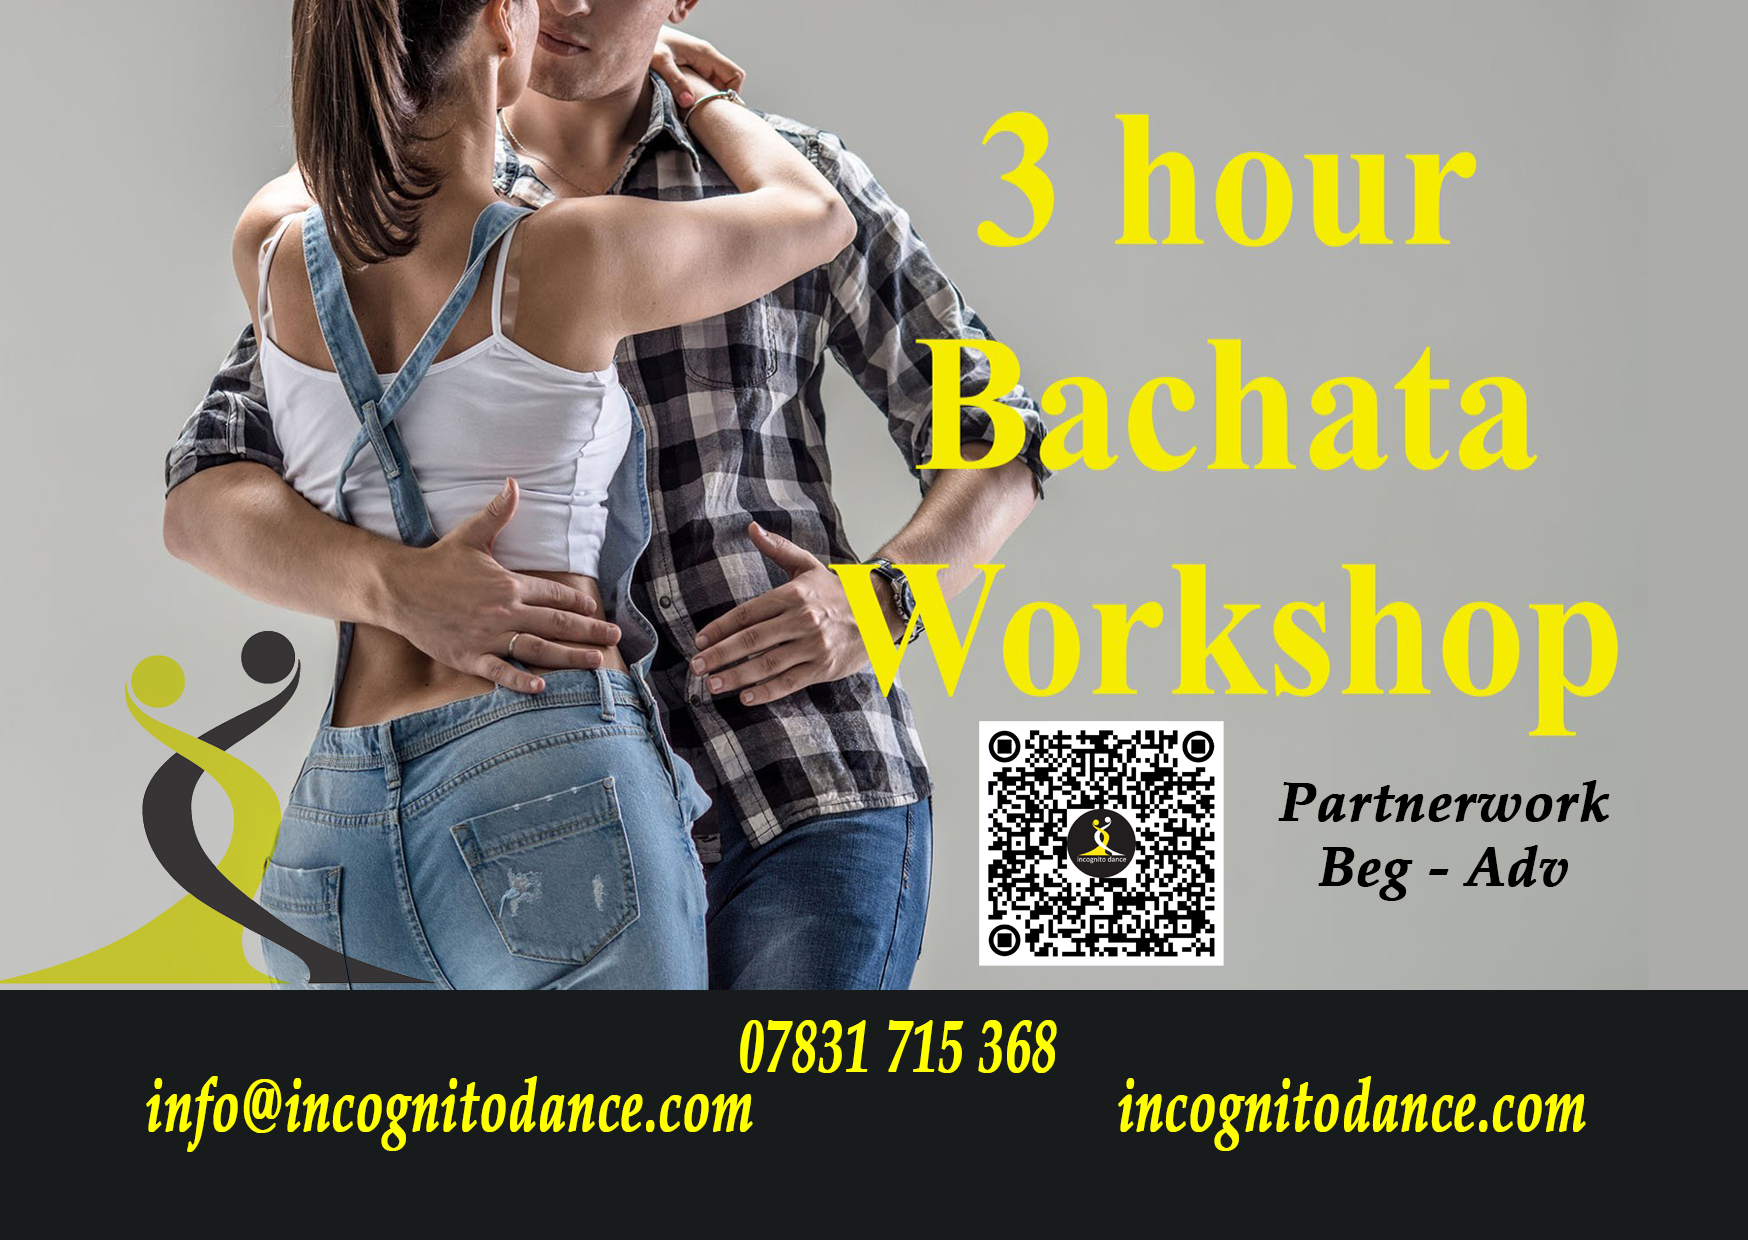 3 hour Bachata Workshop - All levels